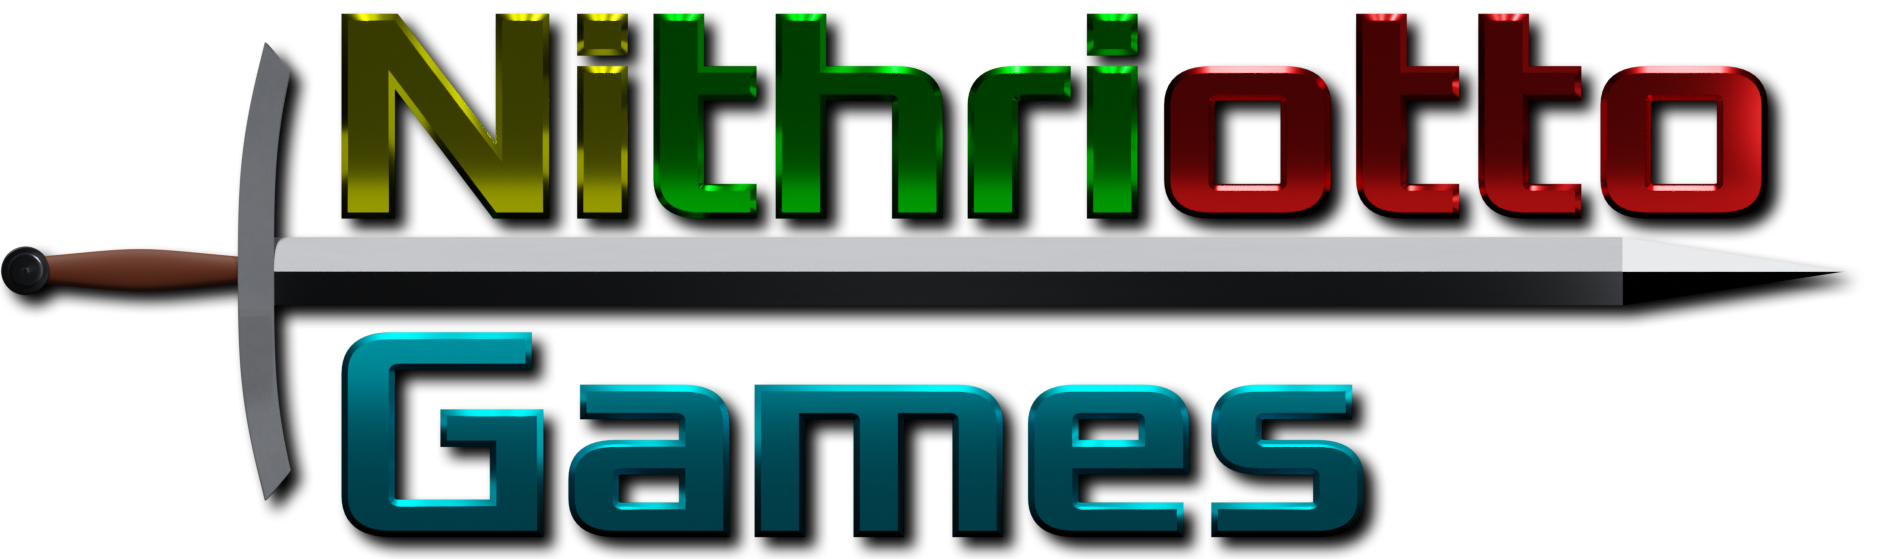 Nithriotto logo